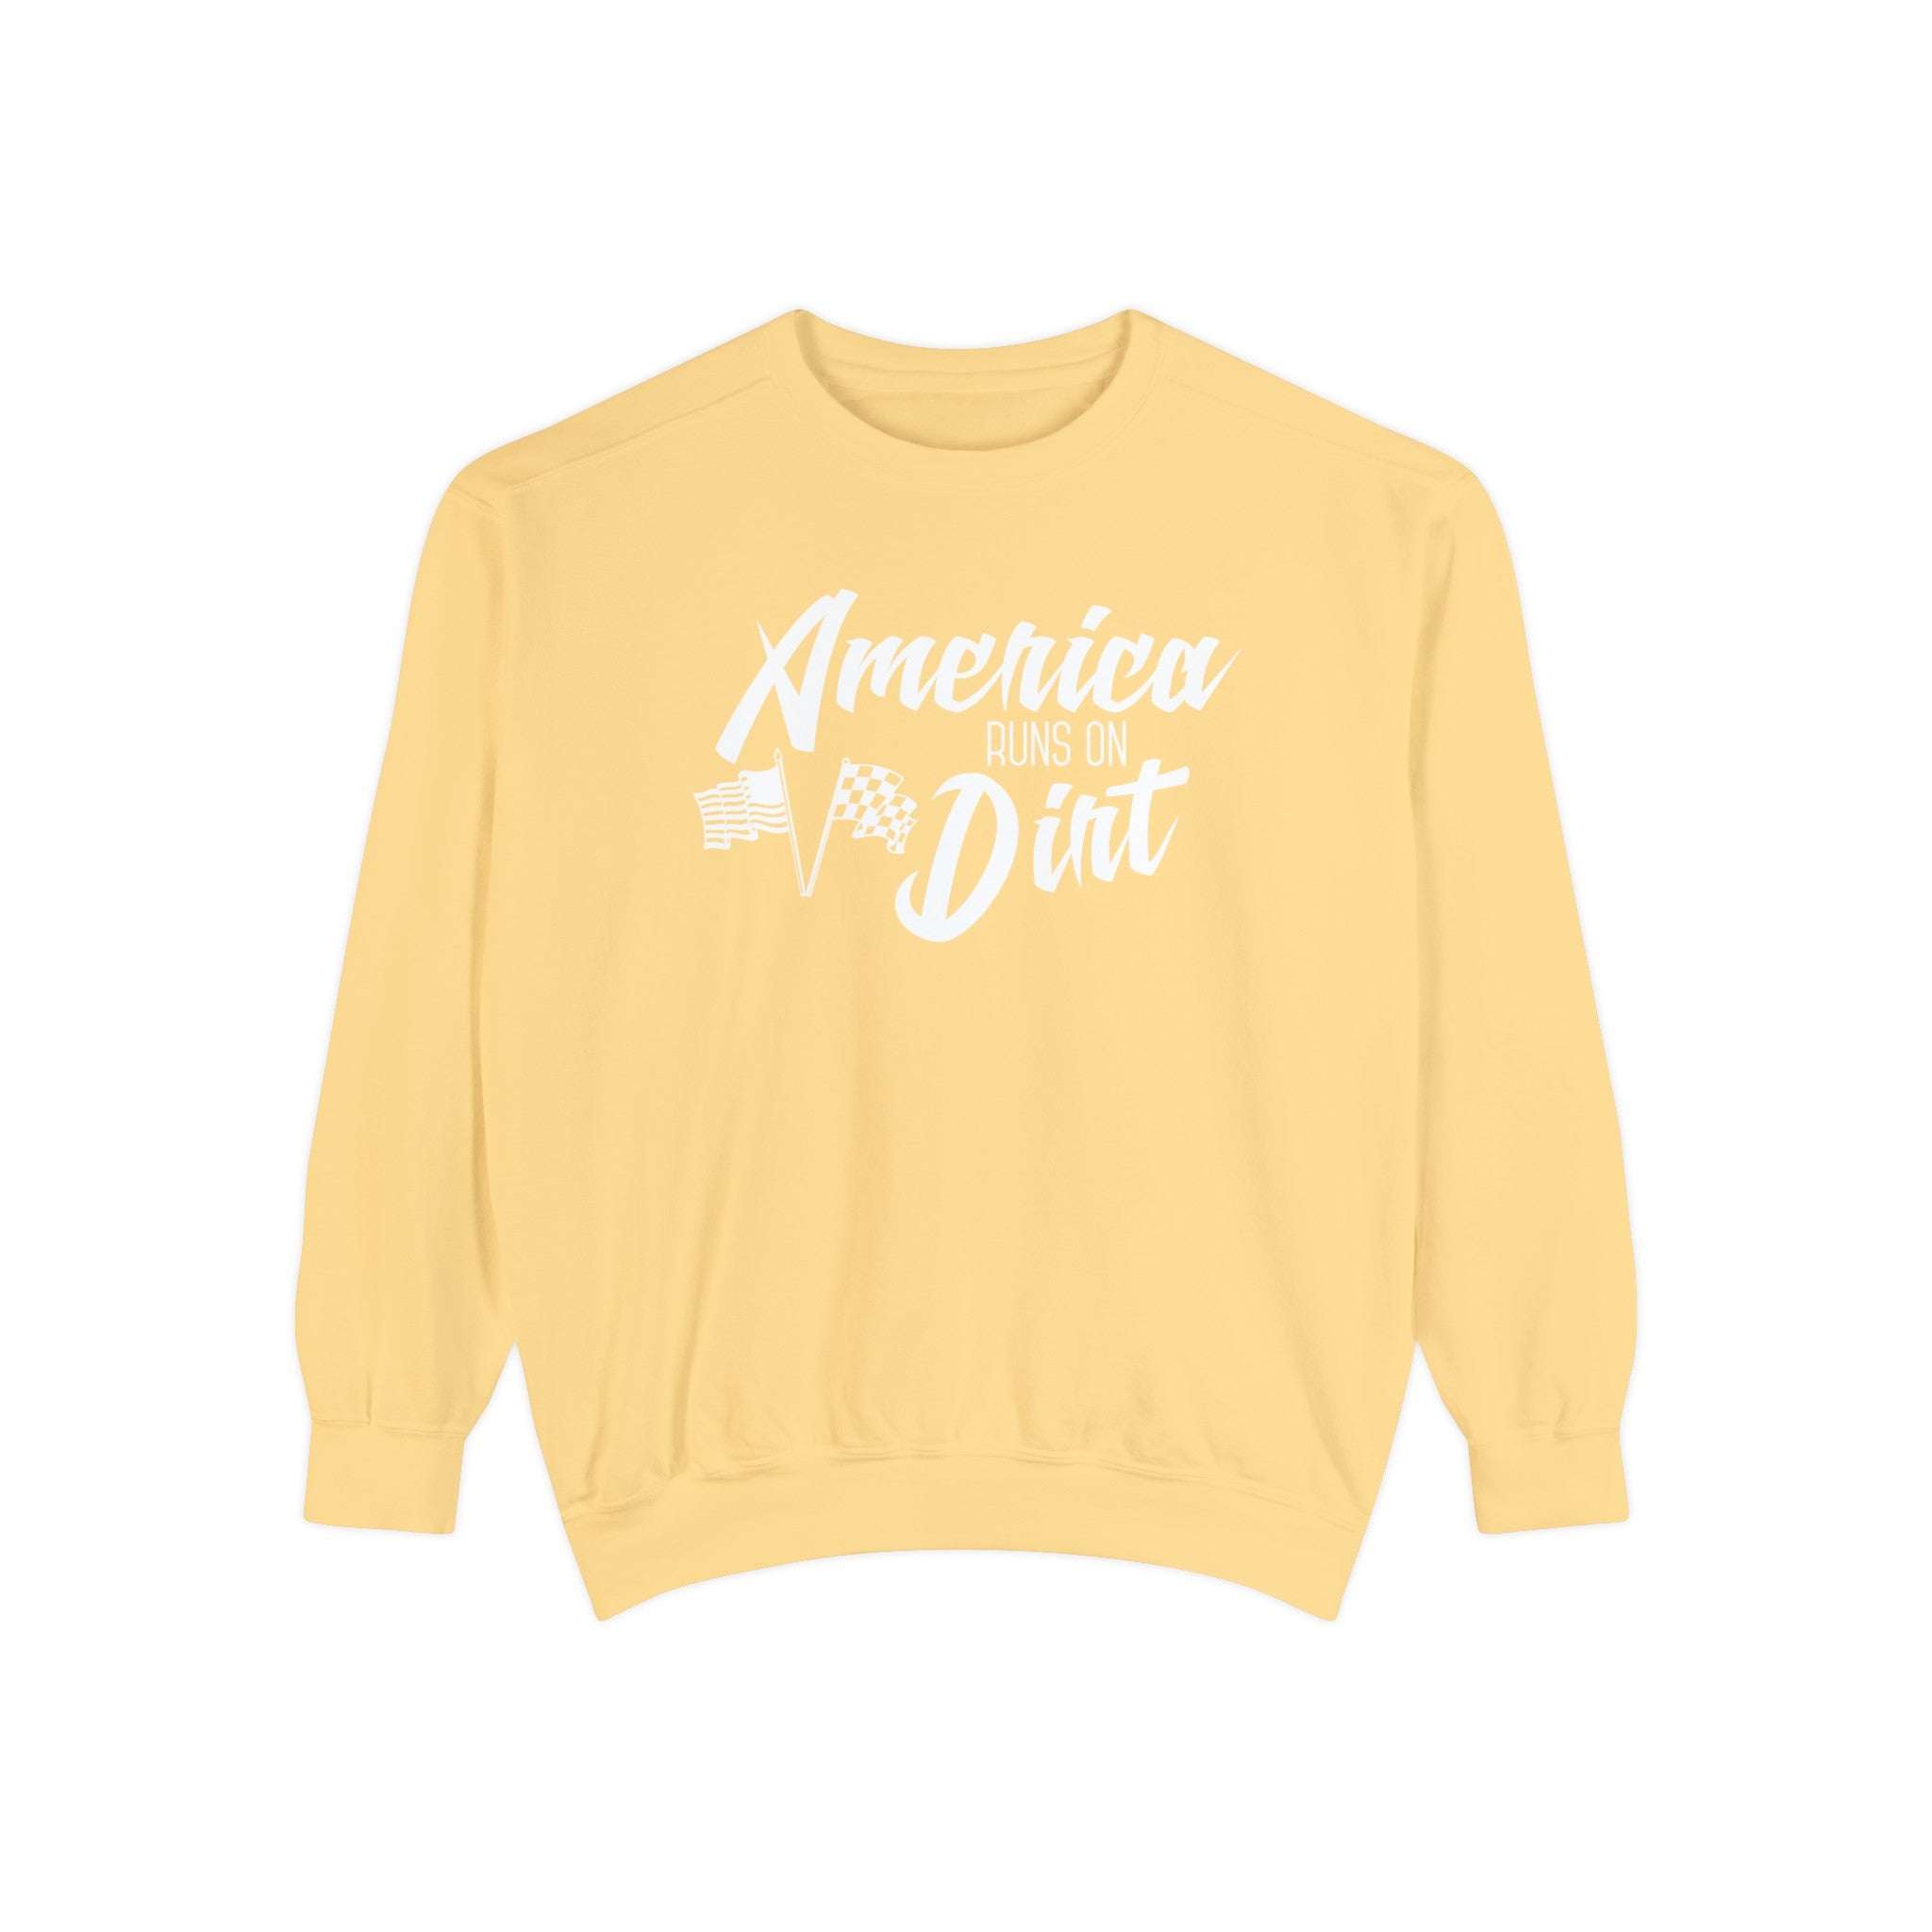 America Runs on Dirt Unisex Garment-Dyed Sweatshirt